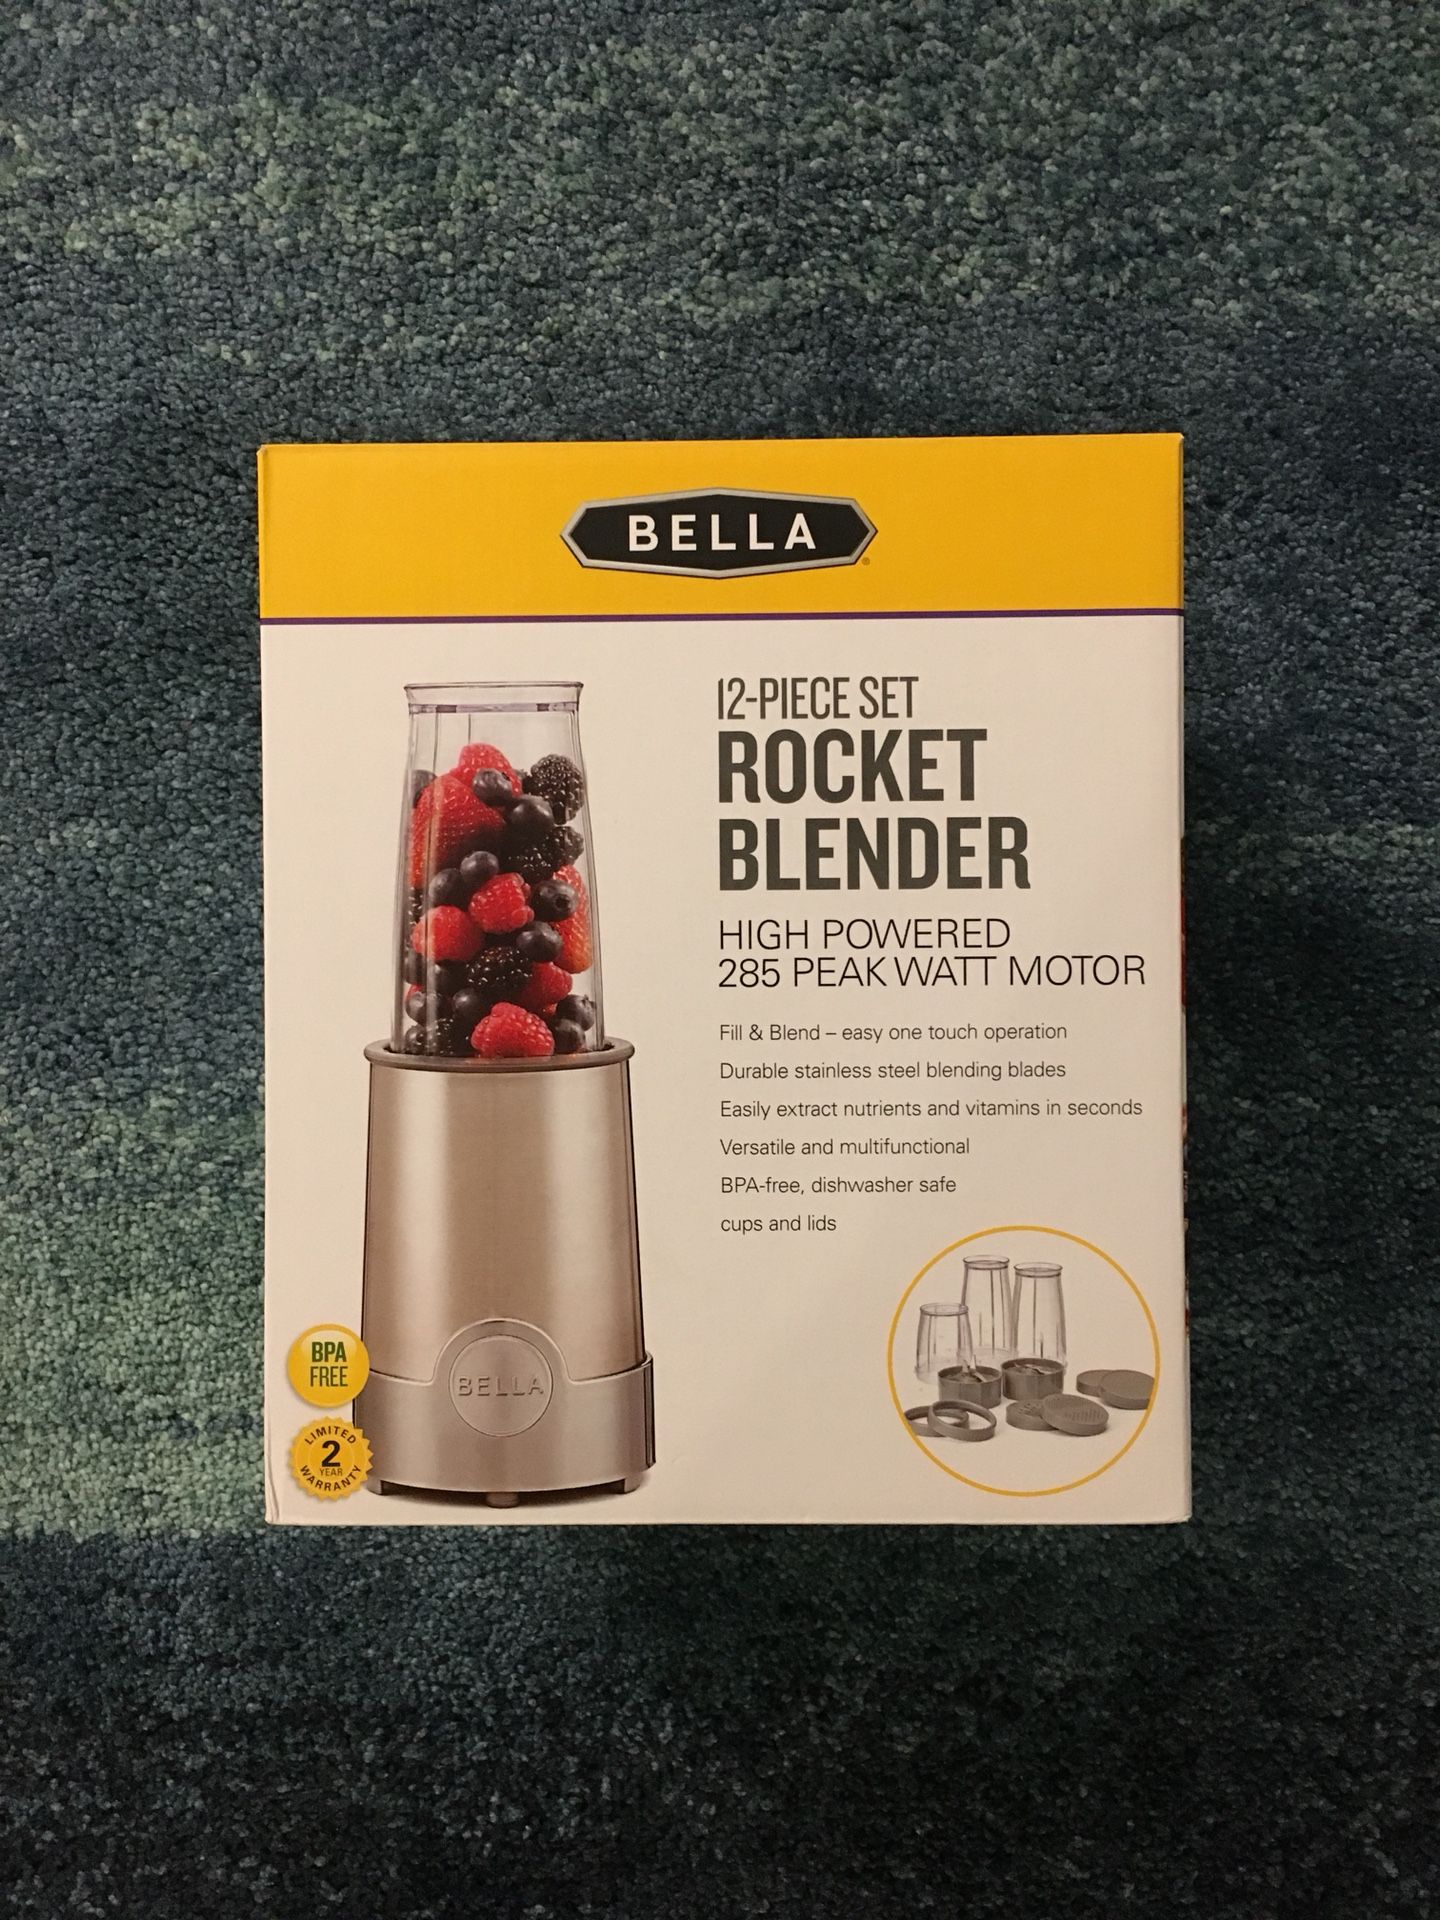 Brand new Bella Rocket Blender 12 Piece Set